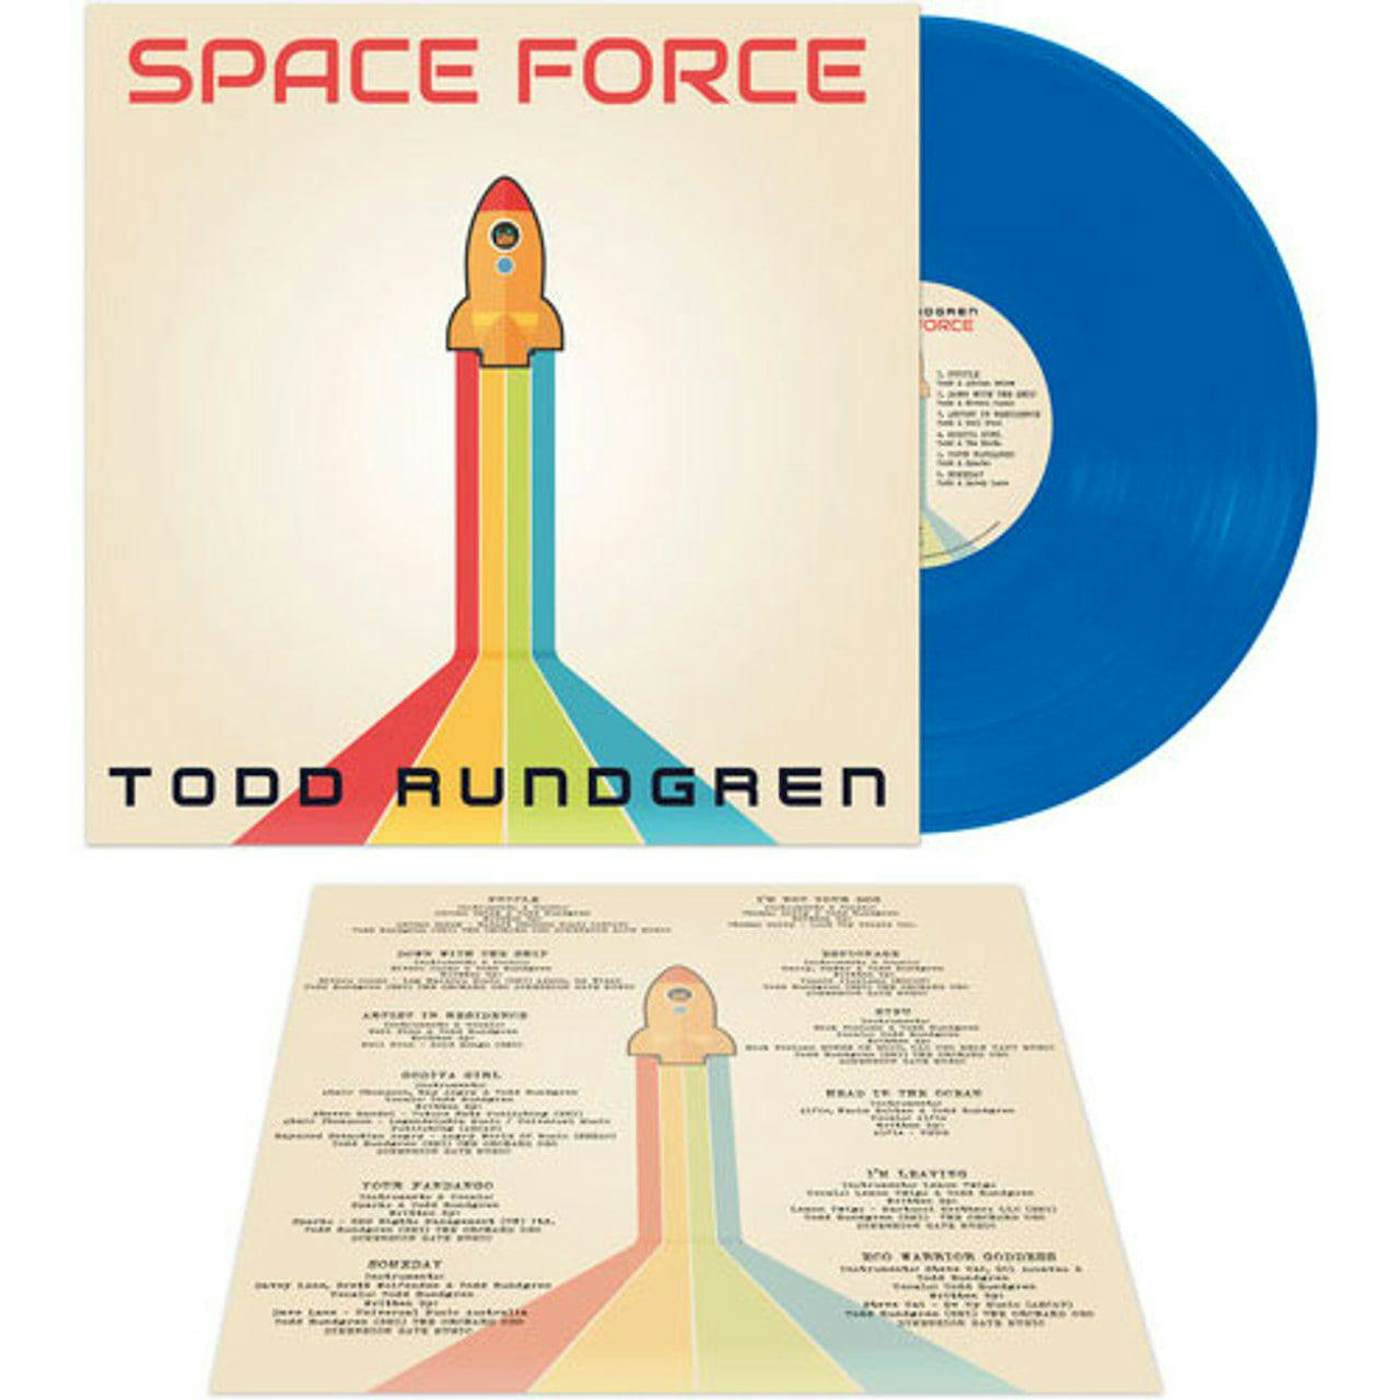 Todd Rundgren Space Force (Blue) Vinyl Record